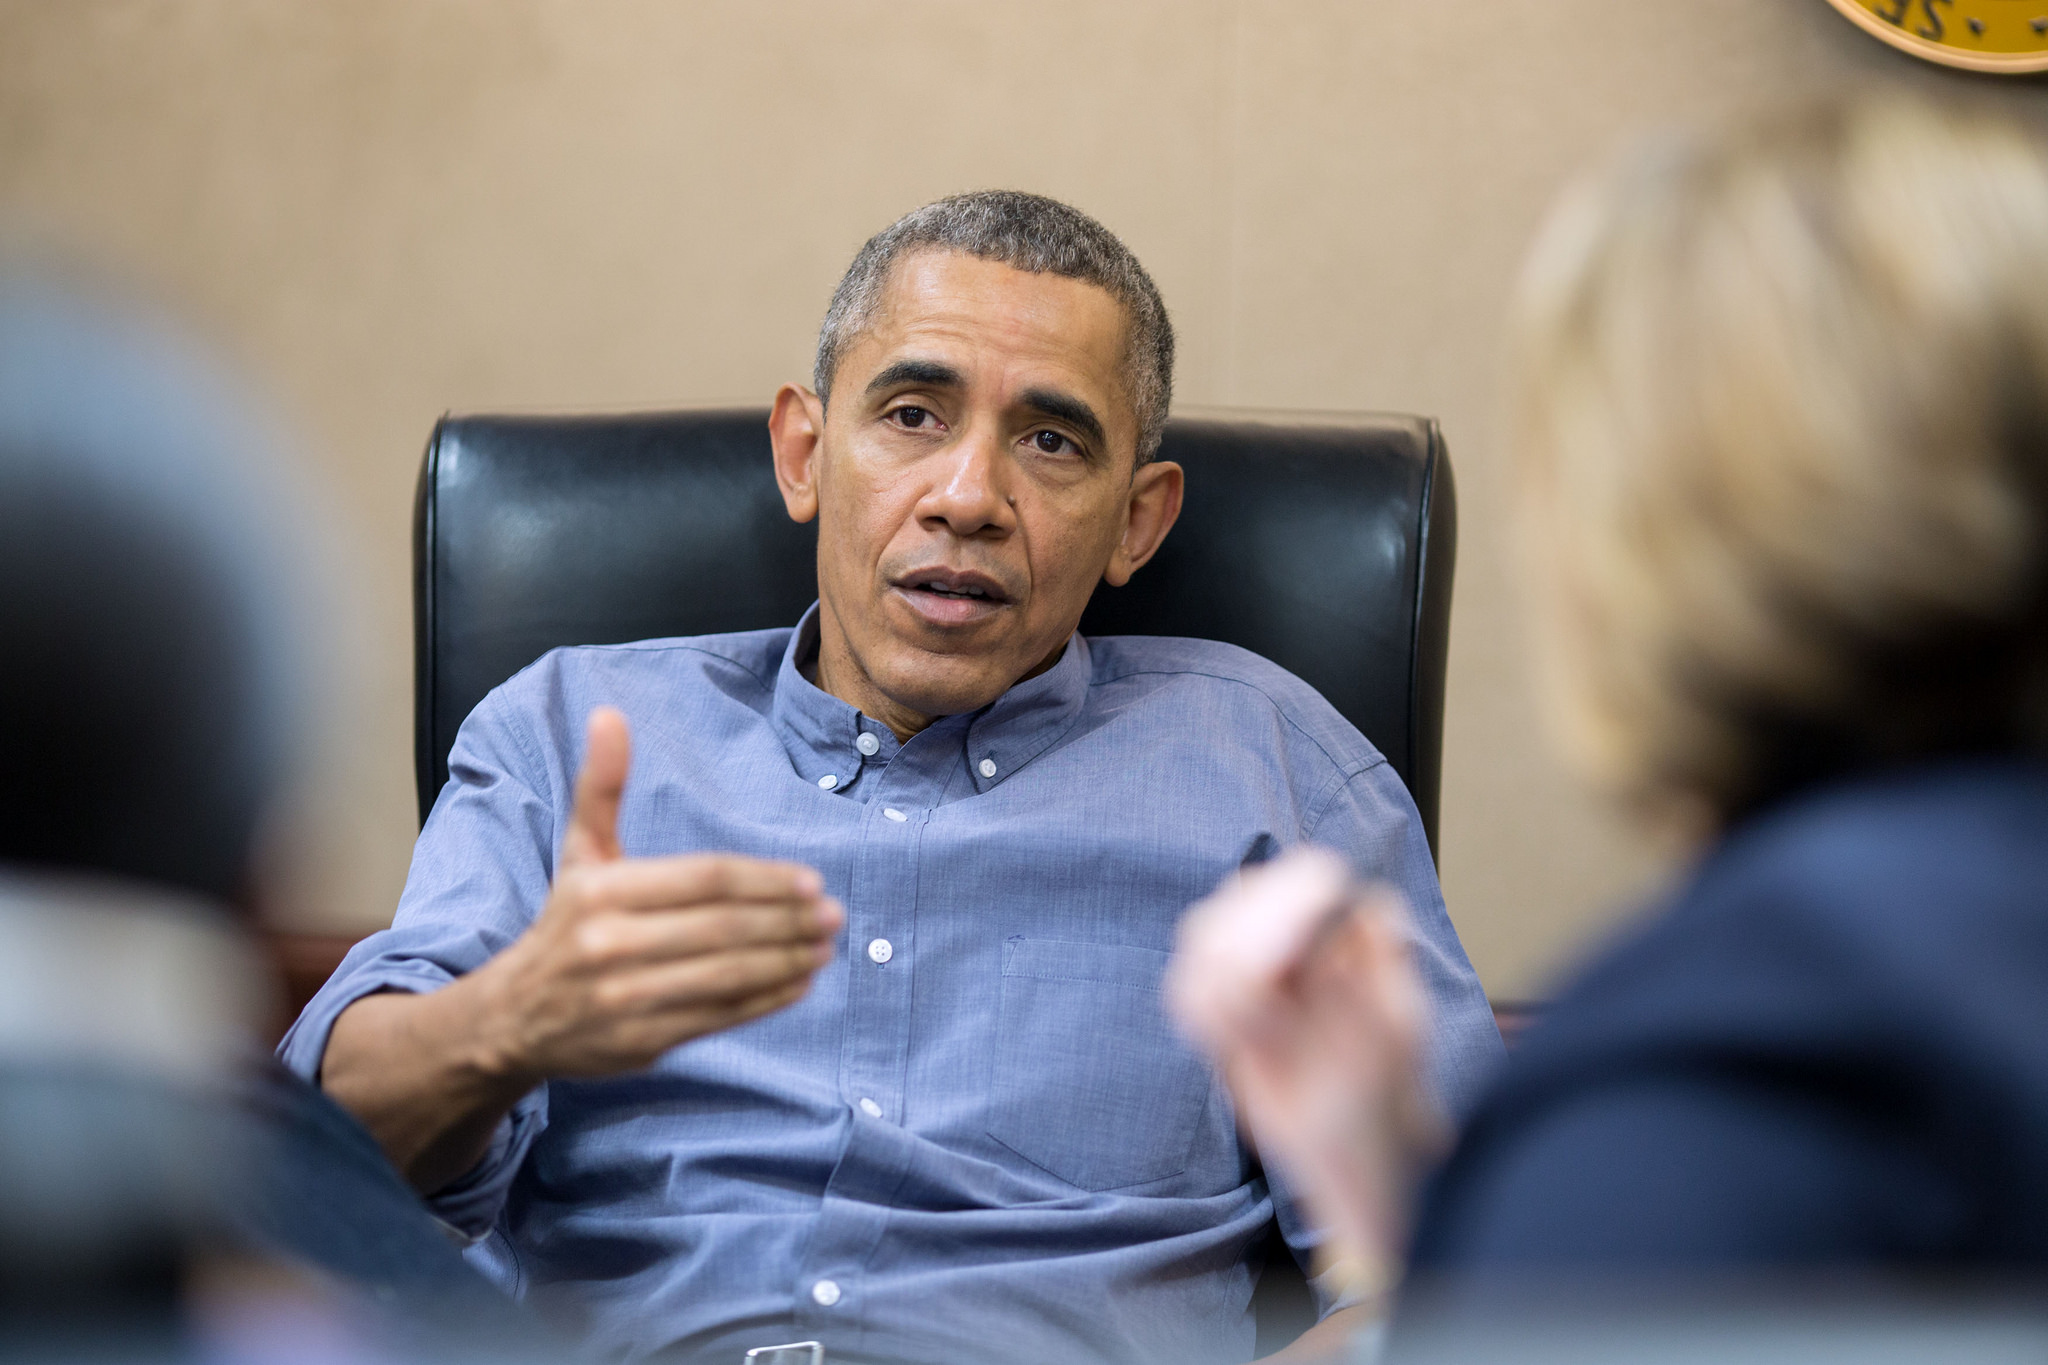 Obama on San Bernardino in Situation Room